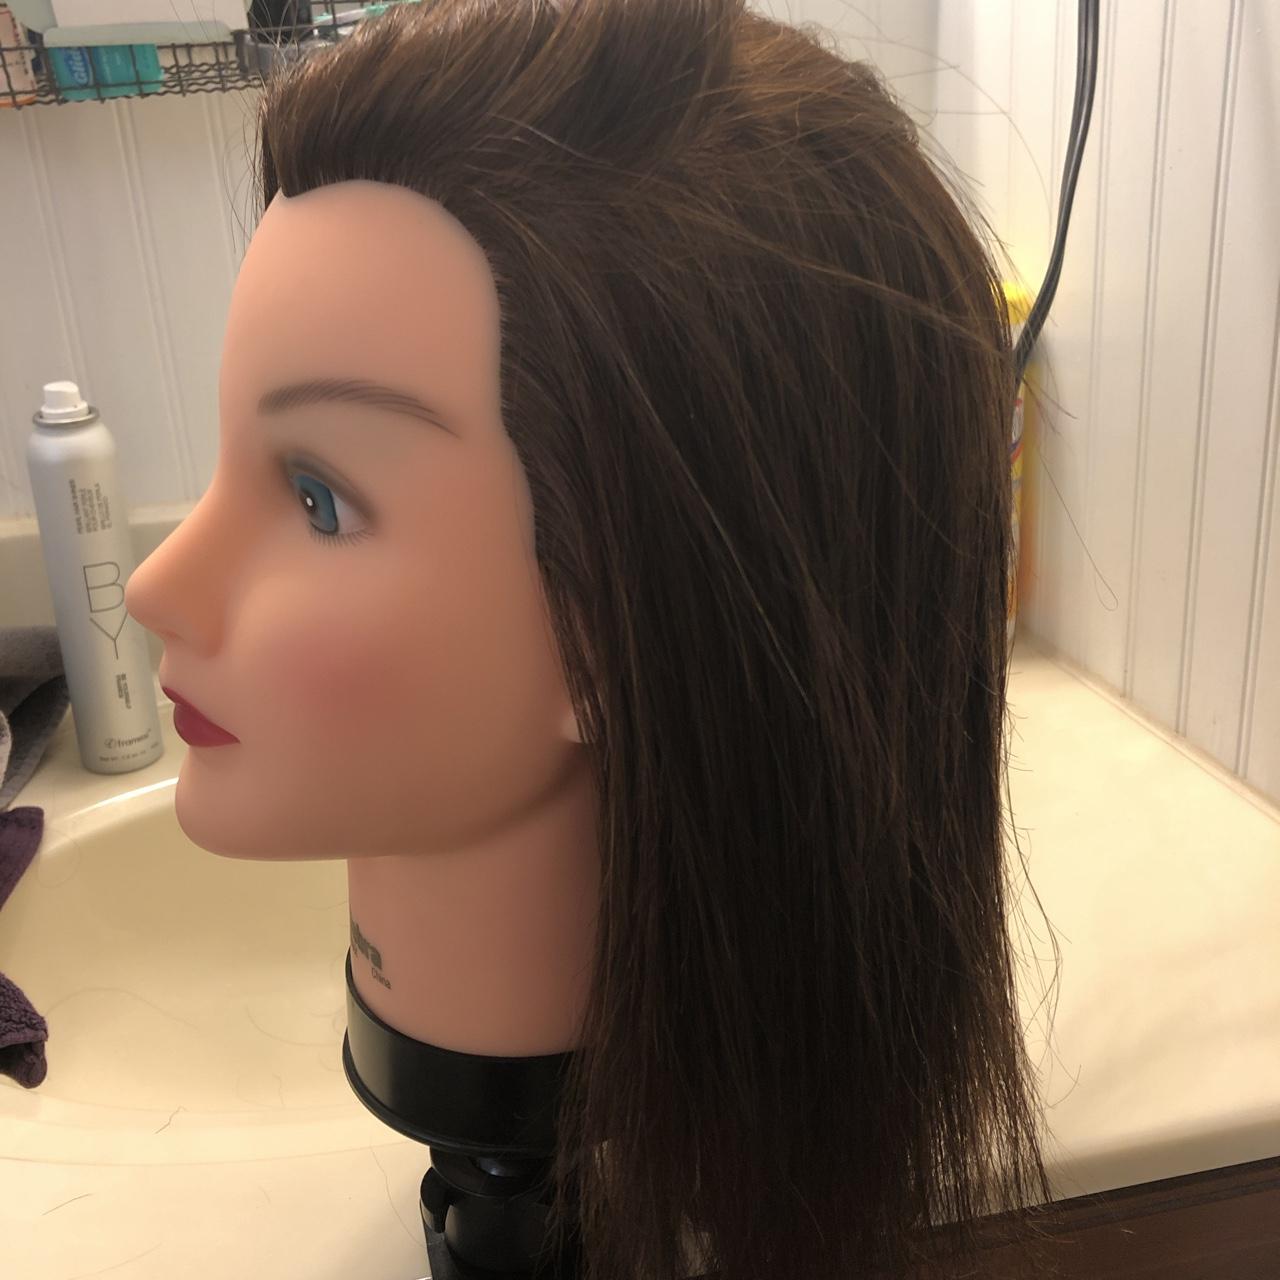 BURMAX HUMAN HAIR Mannequin Head Debra Model Cosmetology Hairdressing  Display $14.99 - PicClick